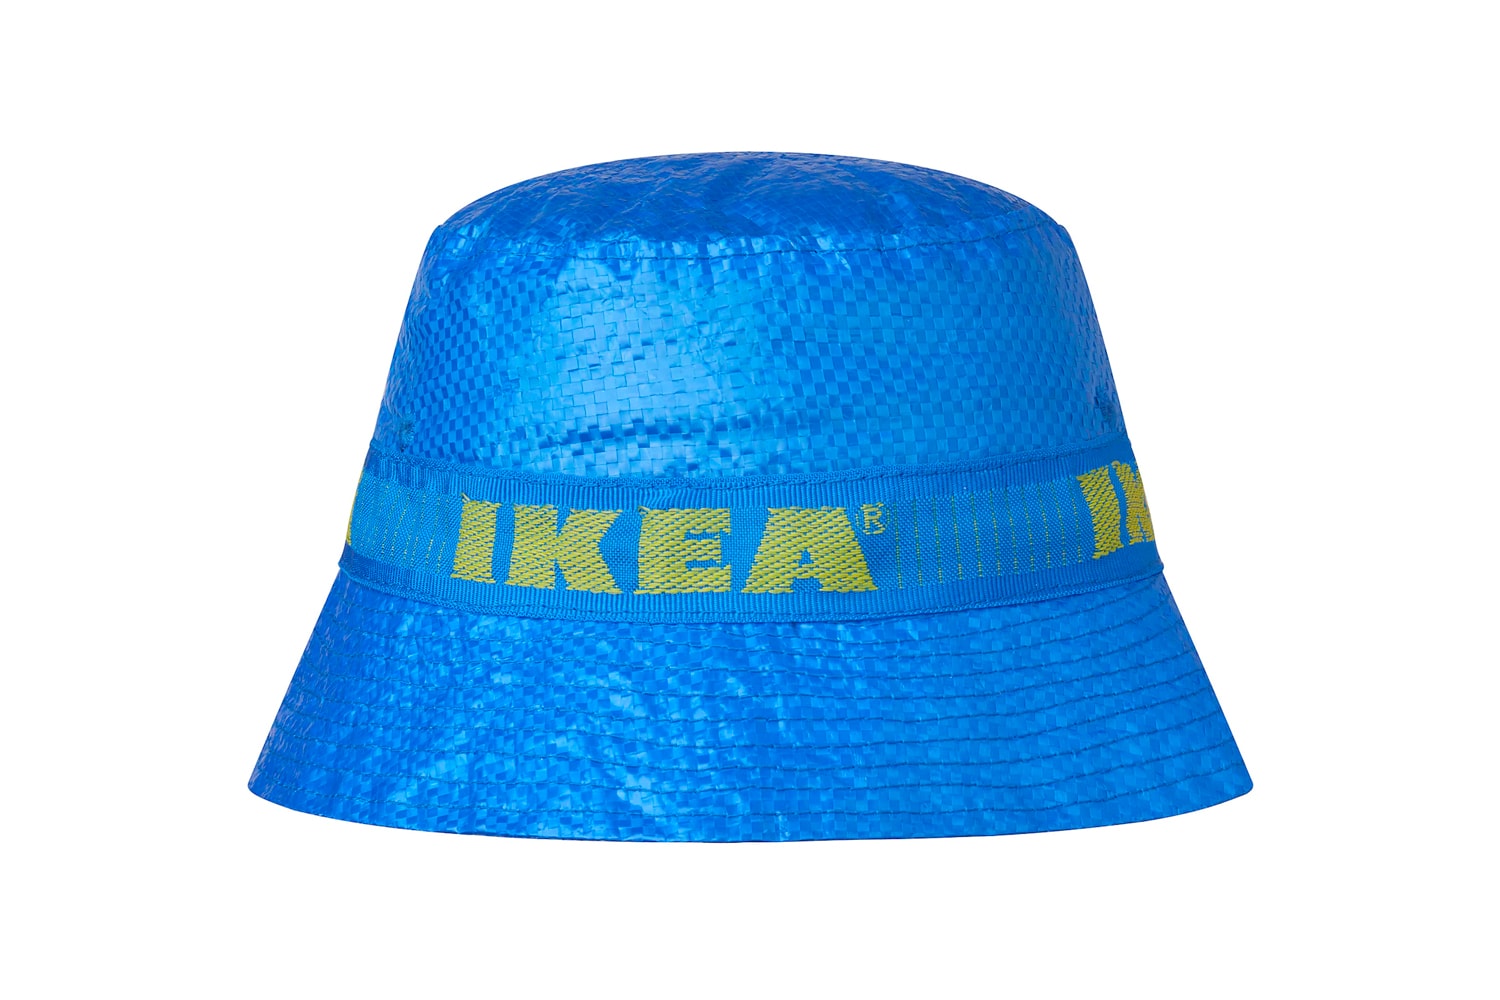 IKEA Drops Official KNORVA Bucket Hat fashion DIY project blue bags FRAKTA carrier bag price details drop 